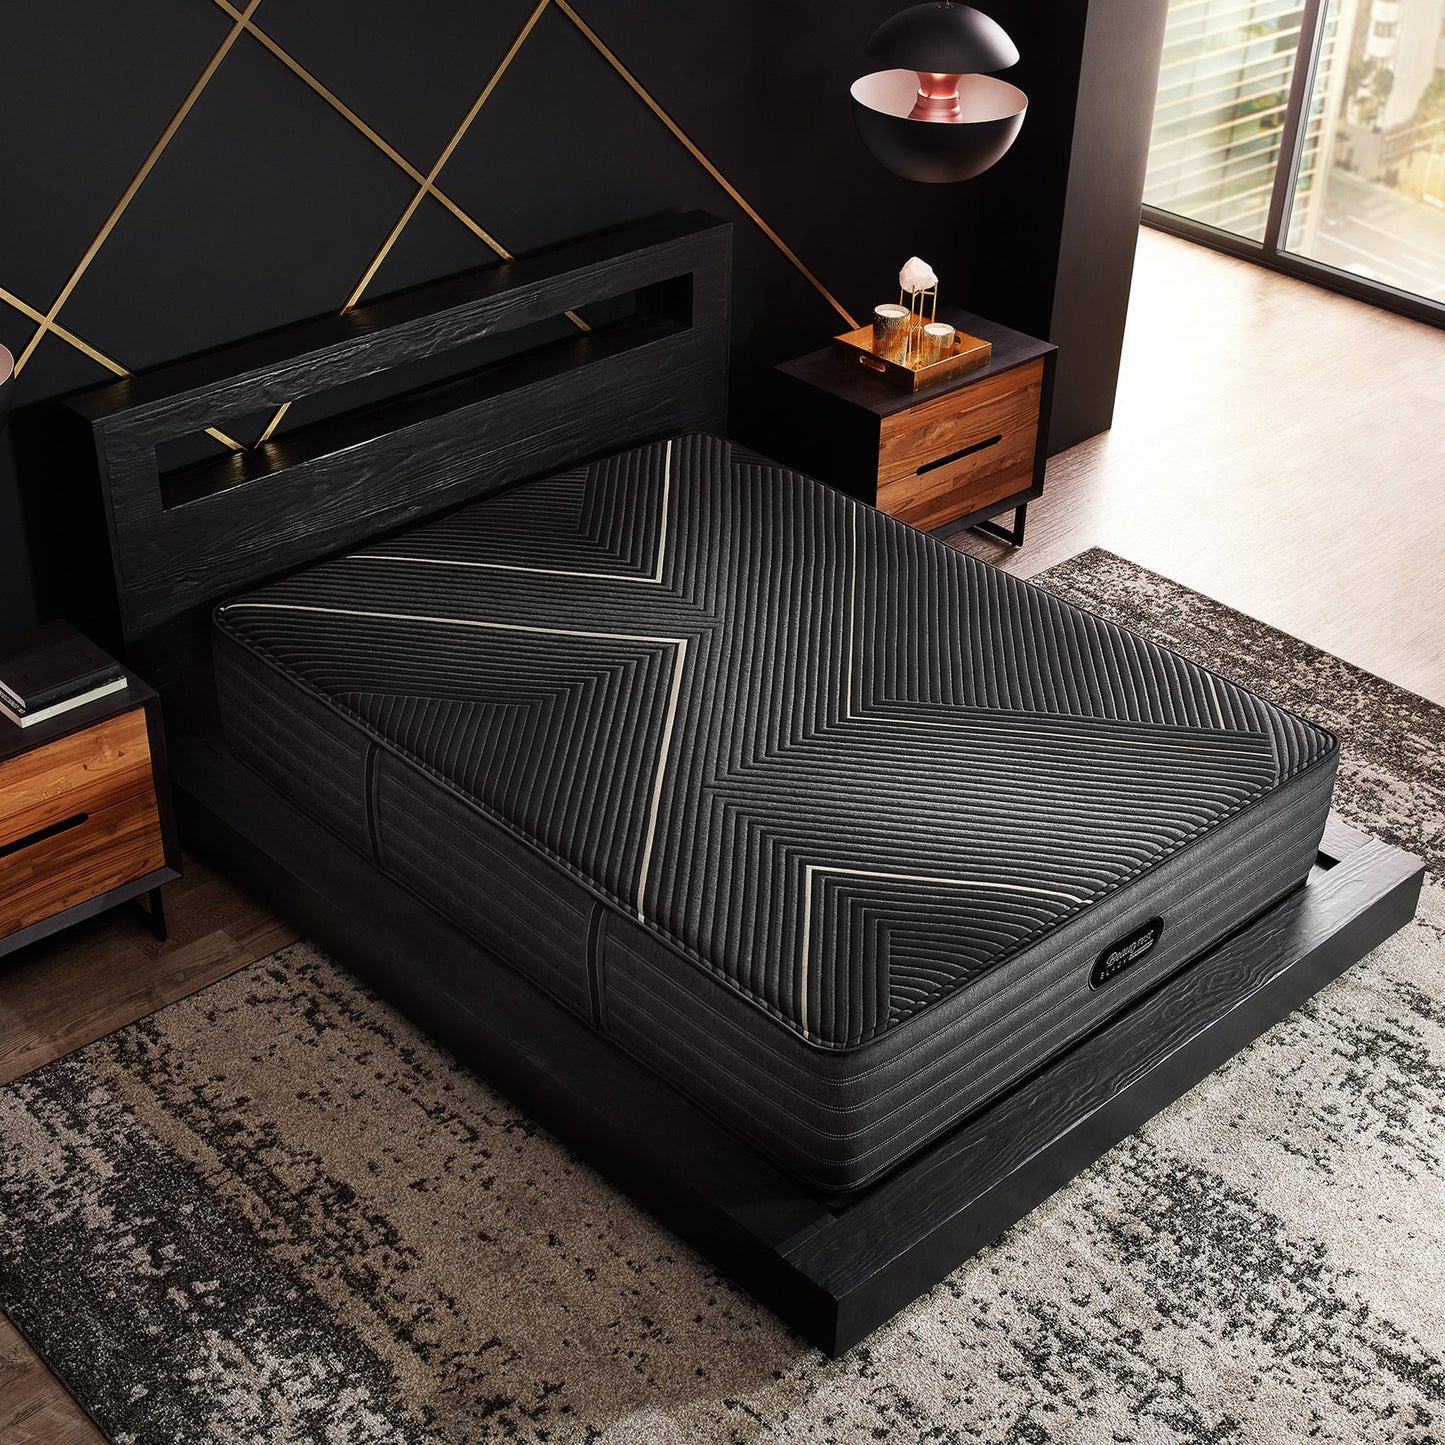 Beautyrest Black Hybrid K-Class Firm Mattress On Bed Frame In Bedroom Overhead View